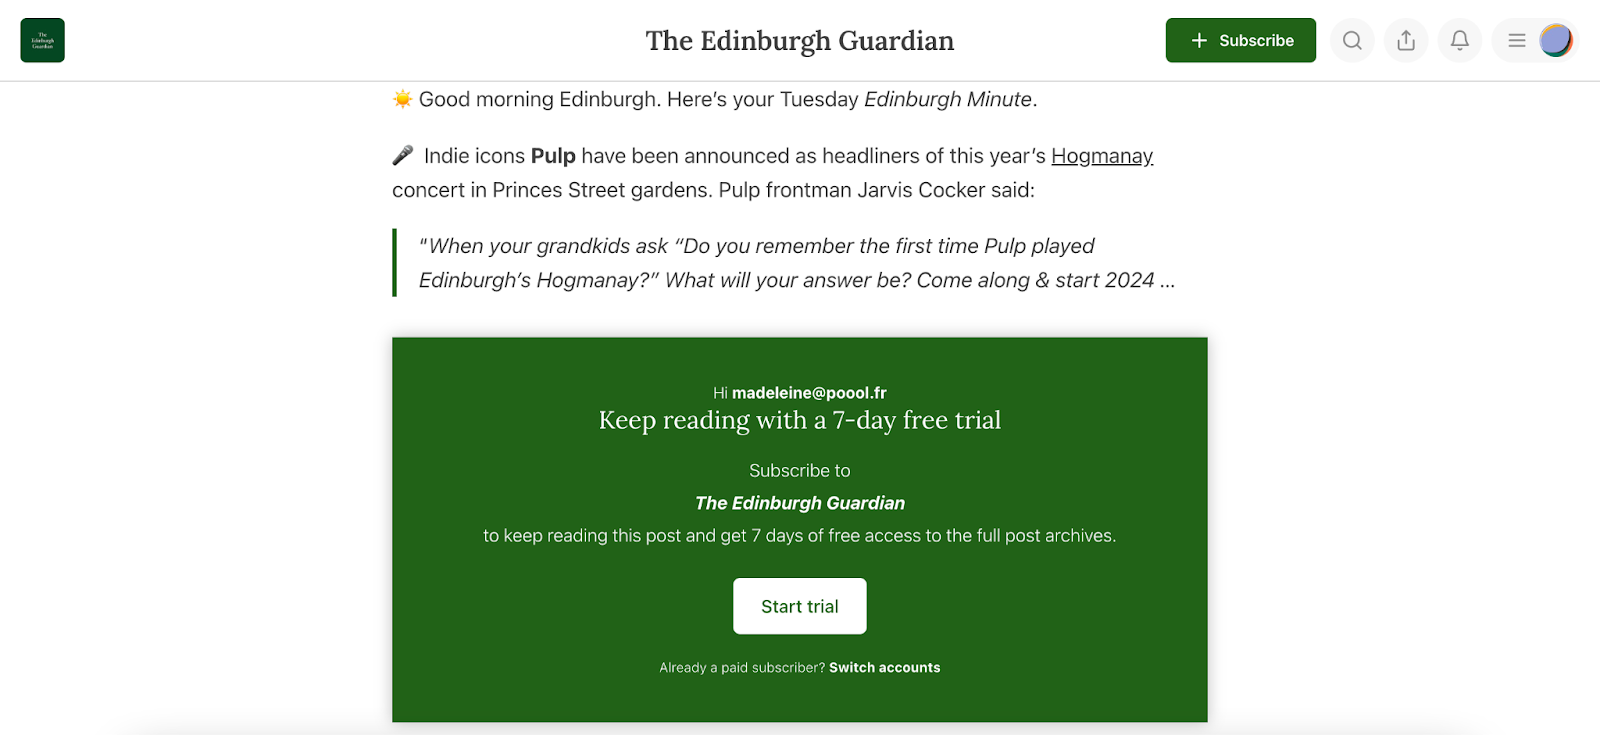 The Edinburgh Guardian newsletter